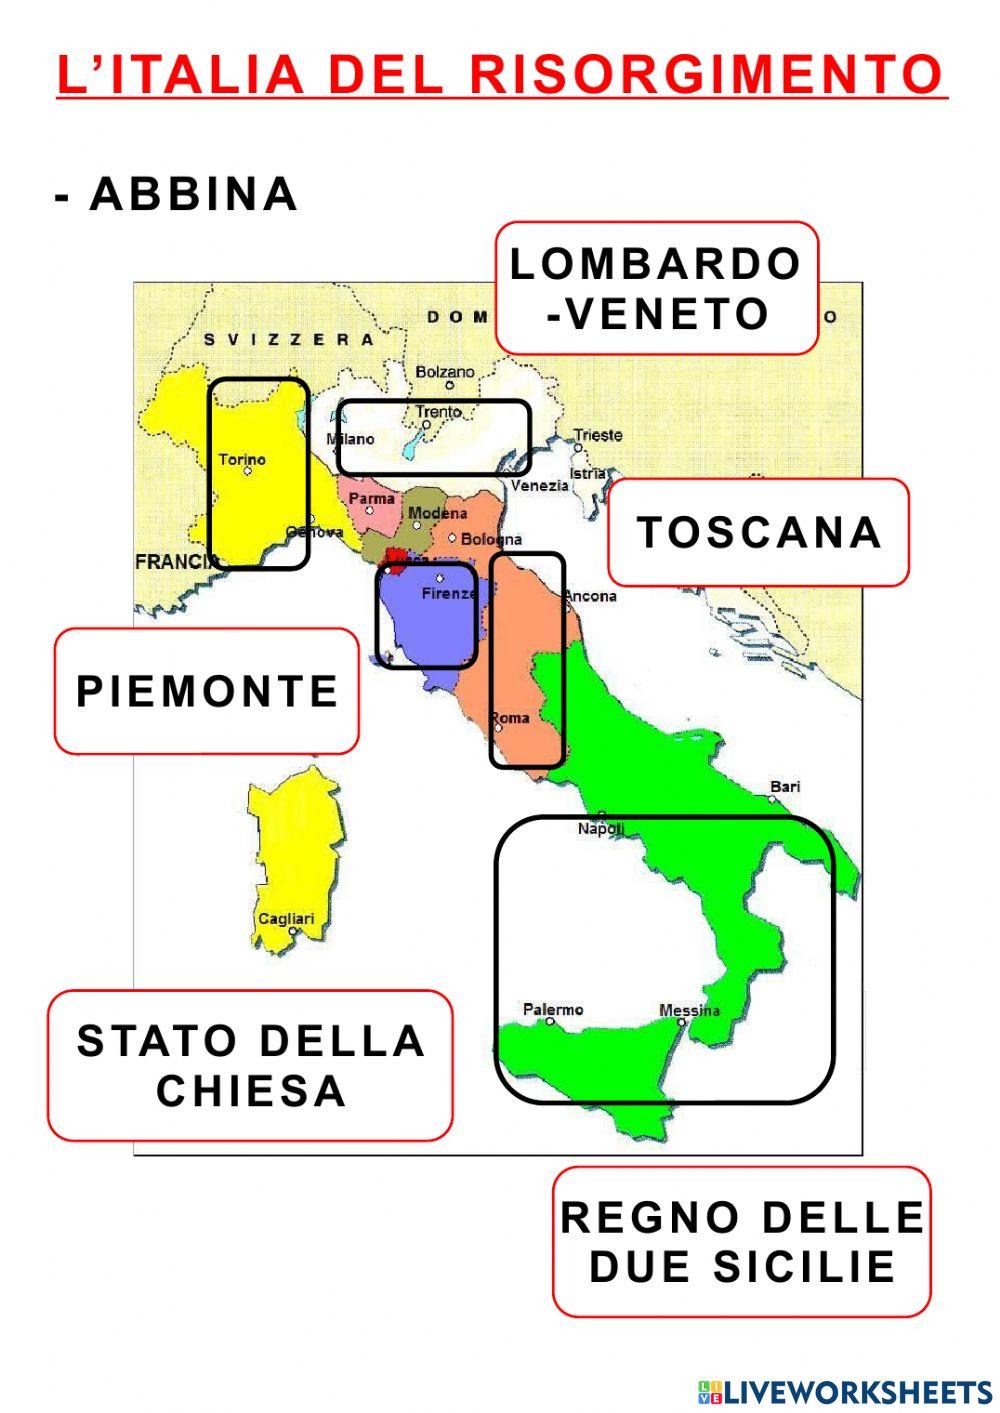 RISORGIMENTO - Stati italiani